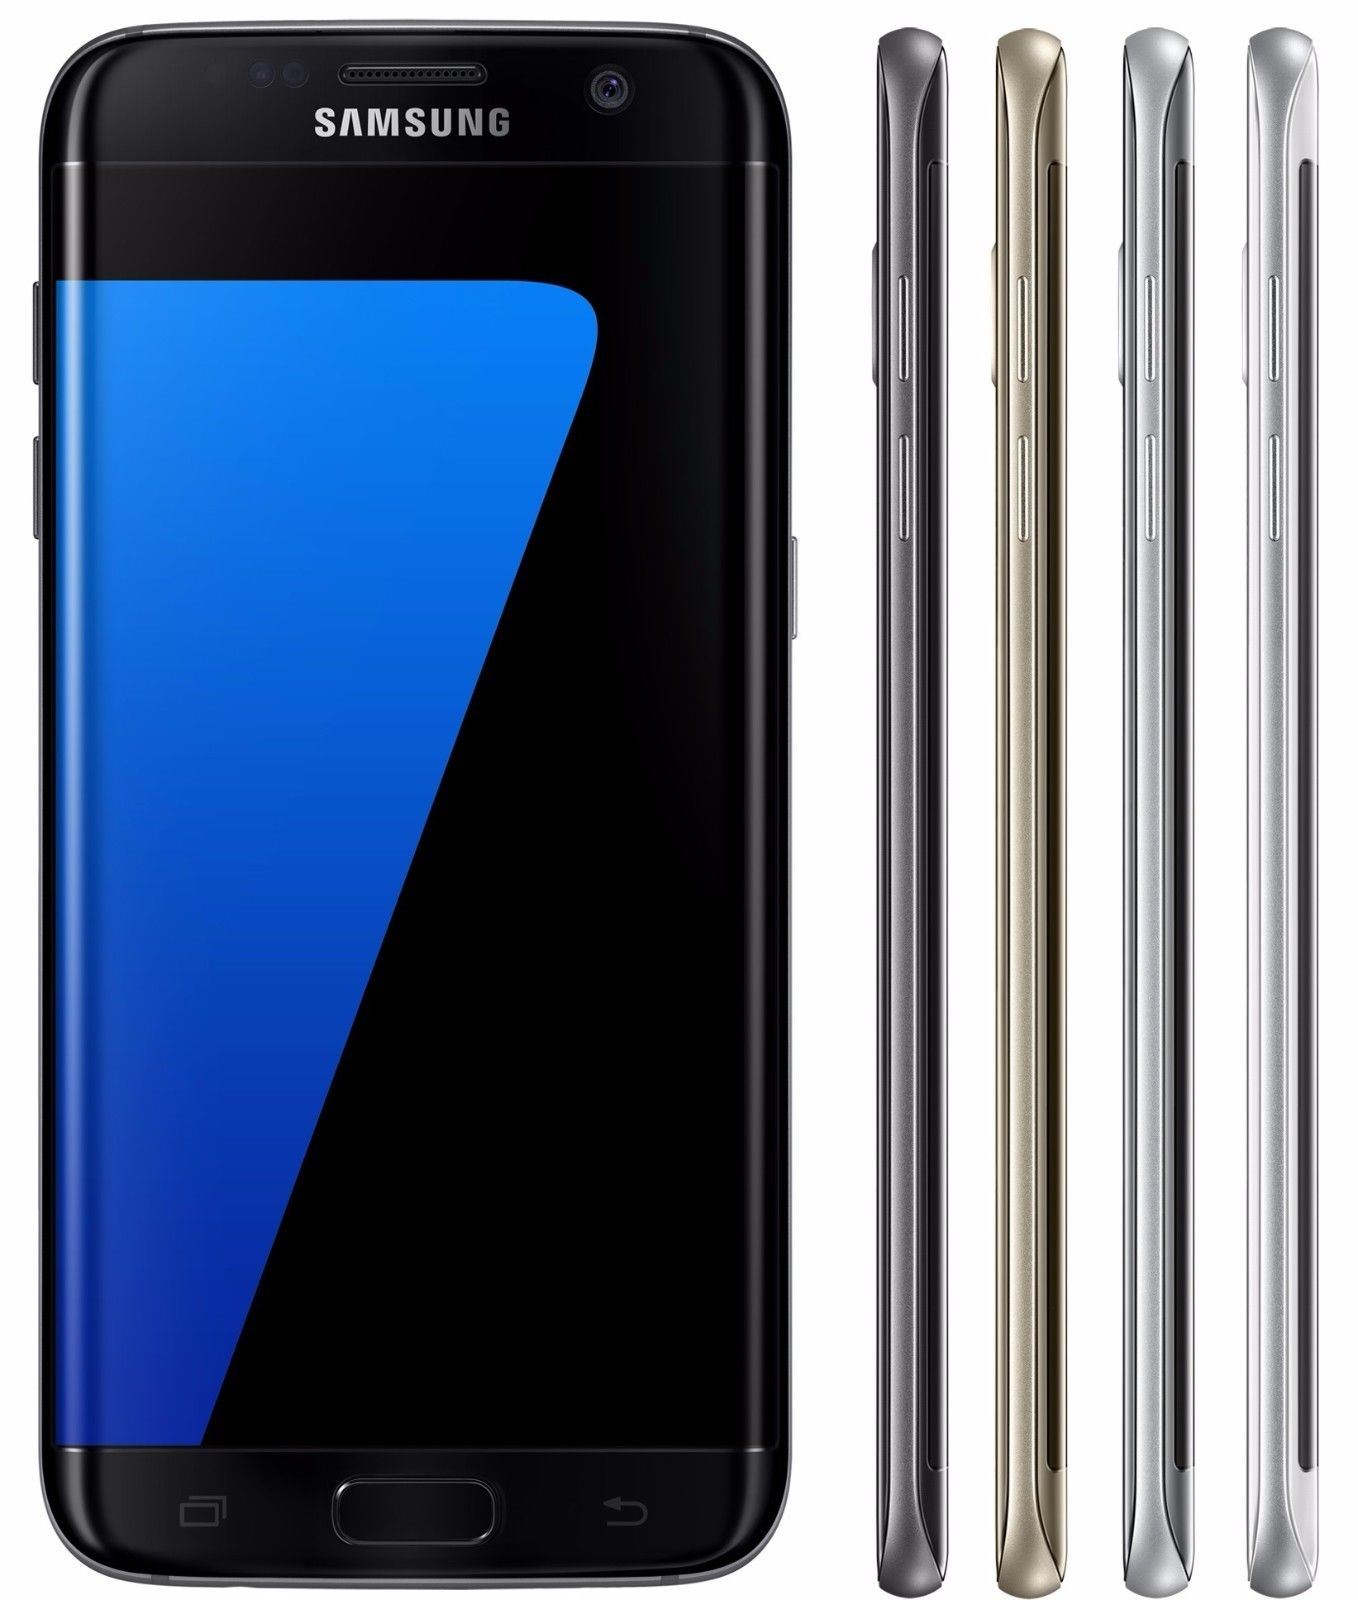 Samsumg Galaxy S7 Edge Sm-G935f Factory Unlocked Mobile Phone